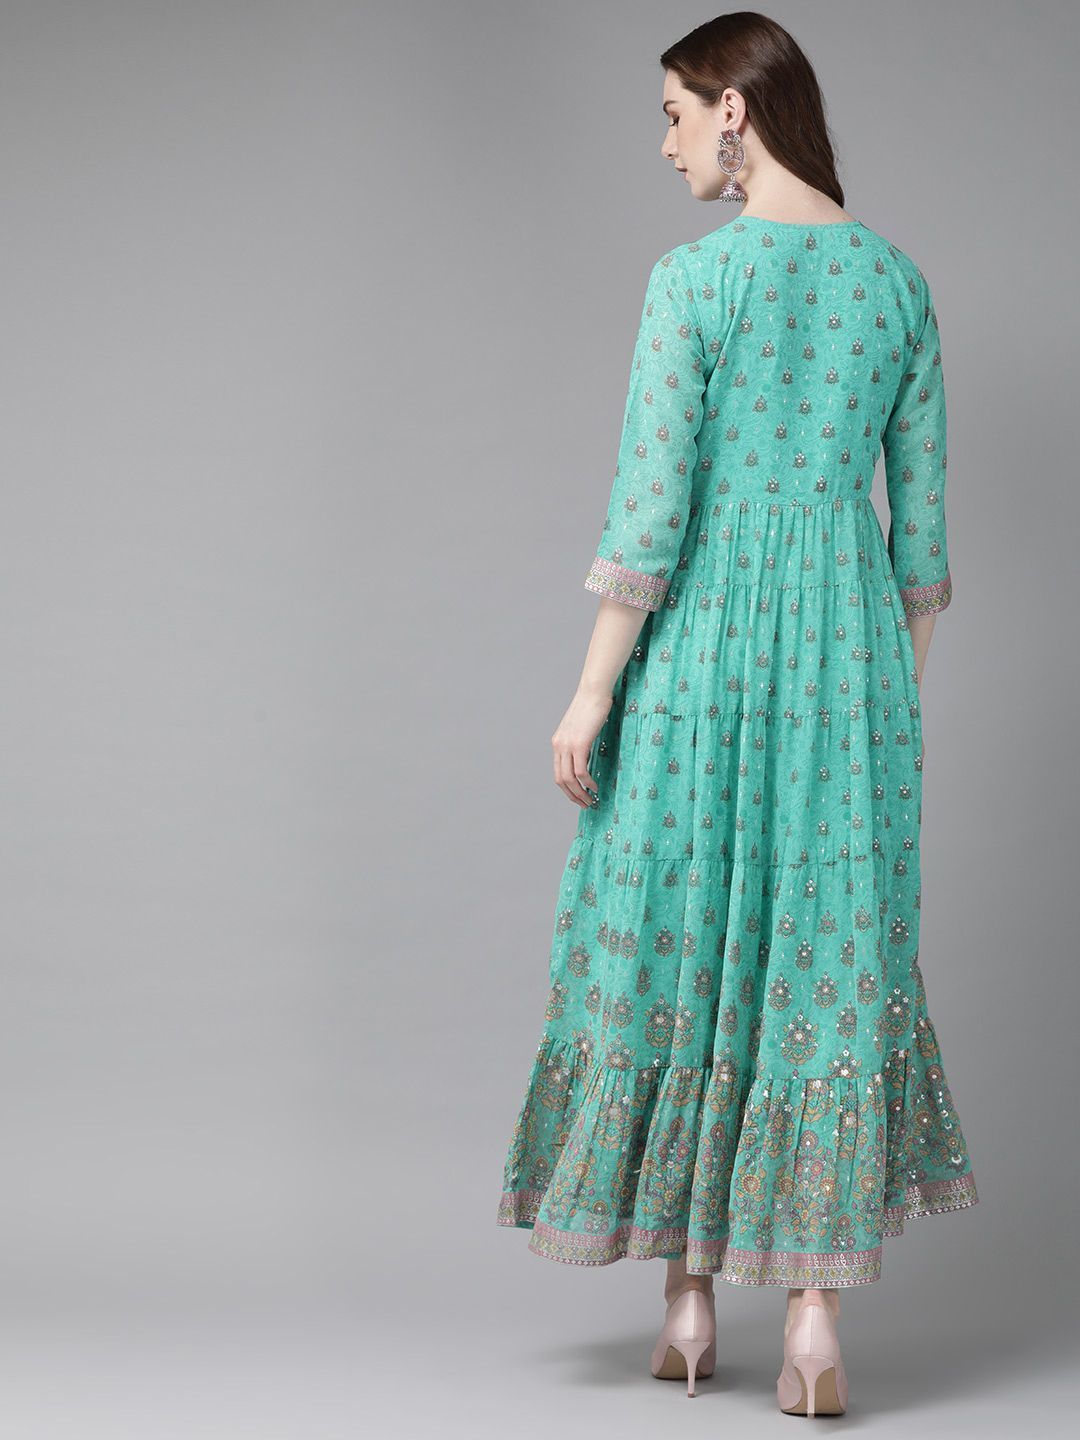 Women's Mint Georgette Printed Tiered Dress1 - Juniper